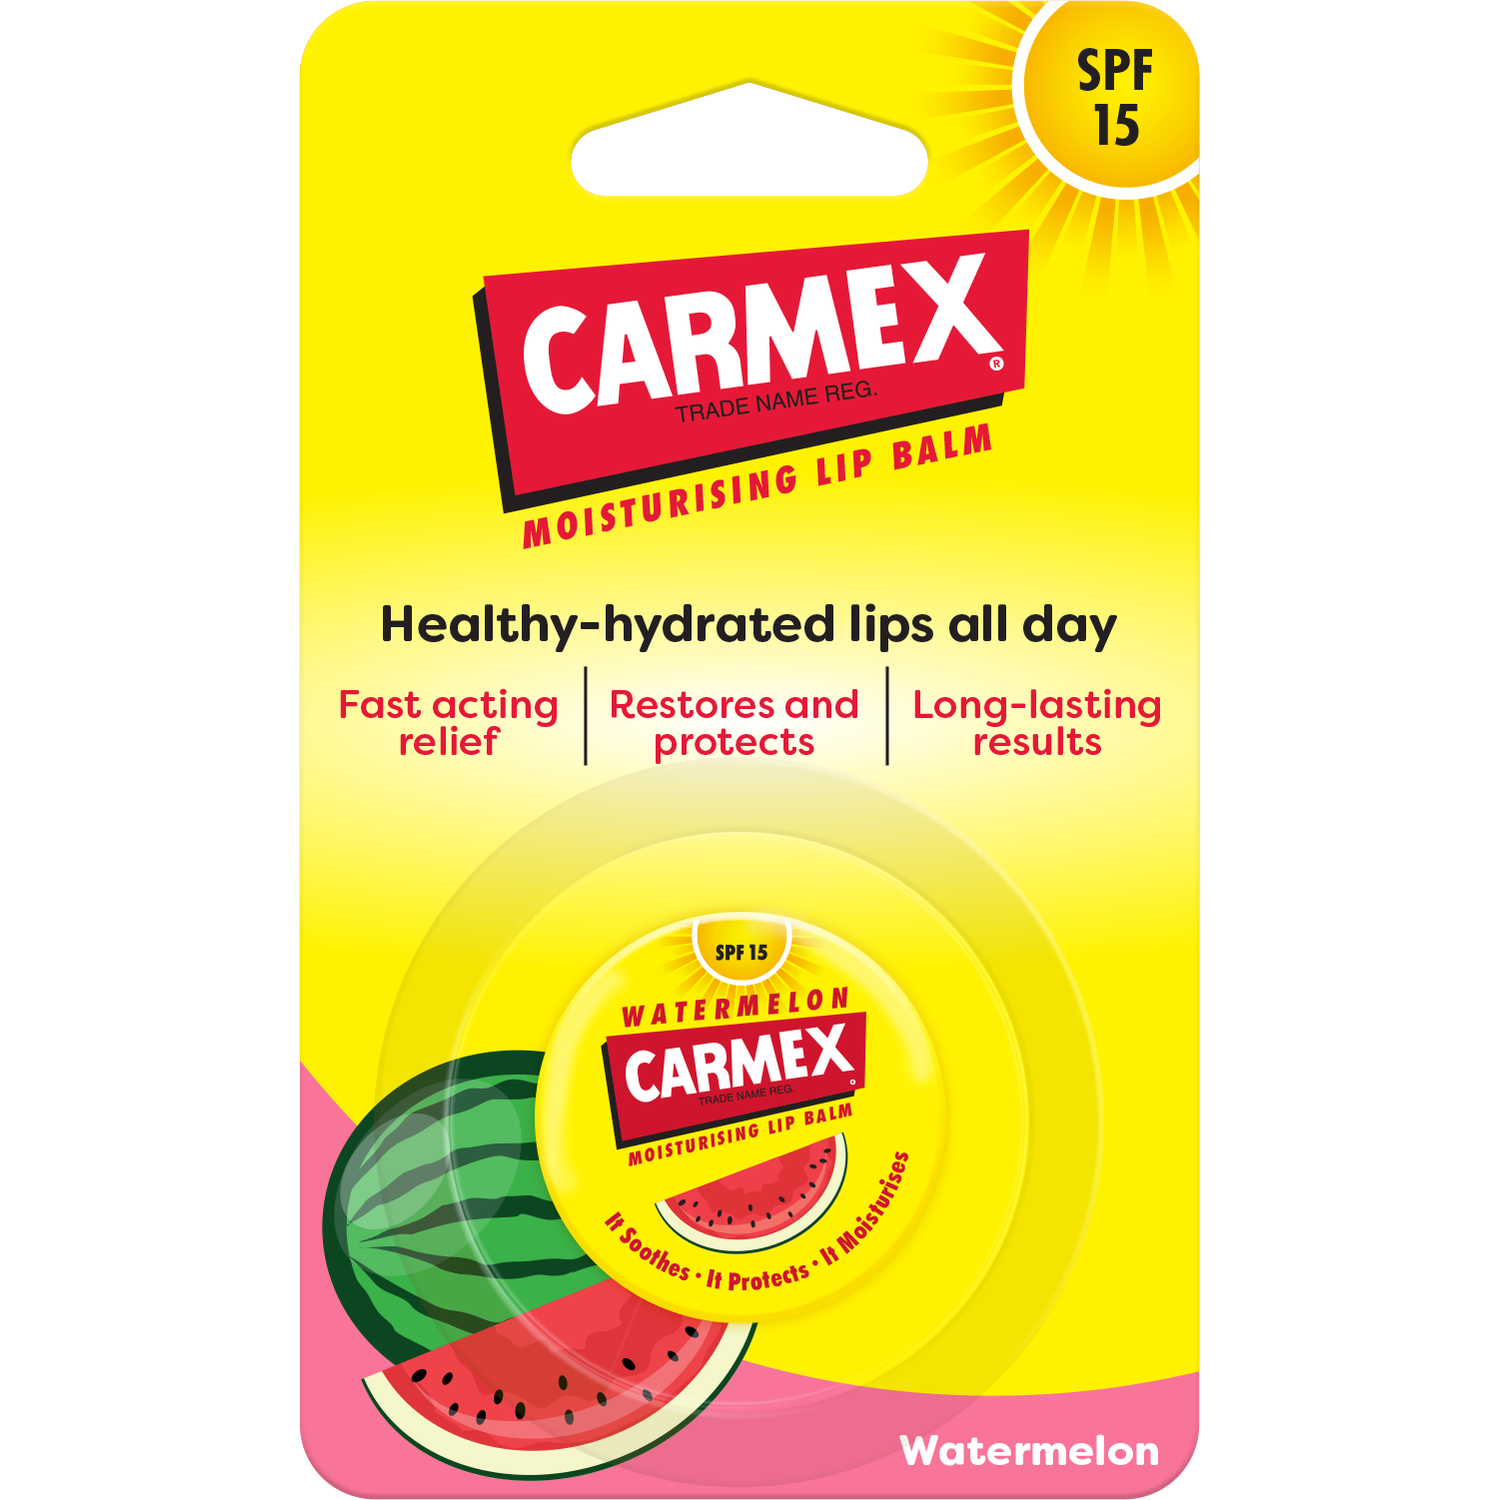 Carmex Moisturising Lip Balm Pot - Yellow / Watermelon Image